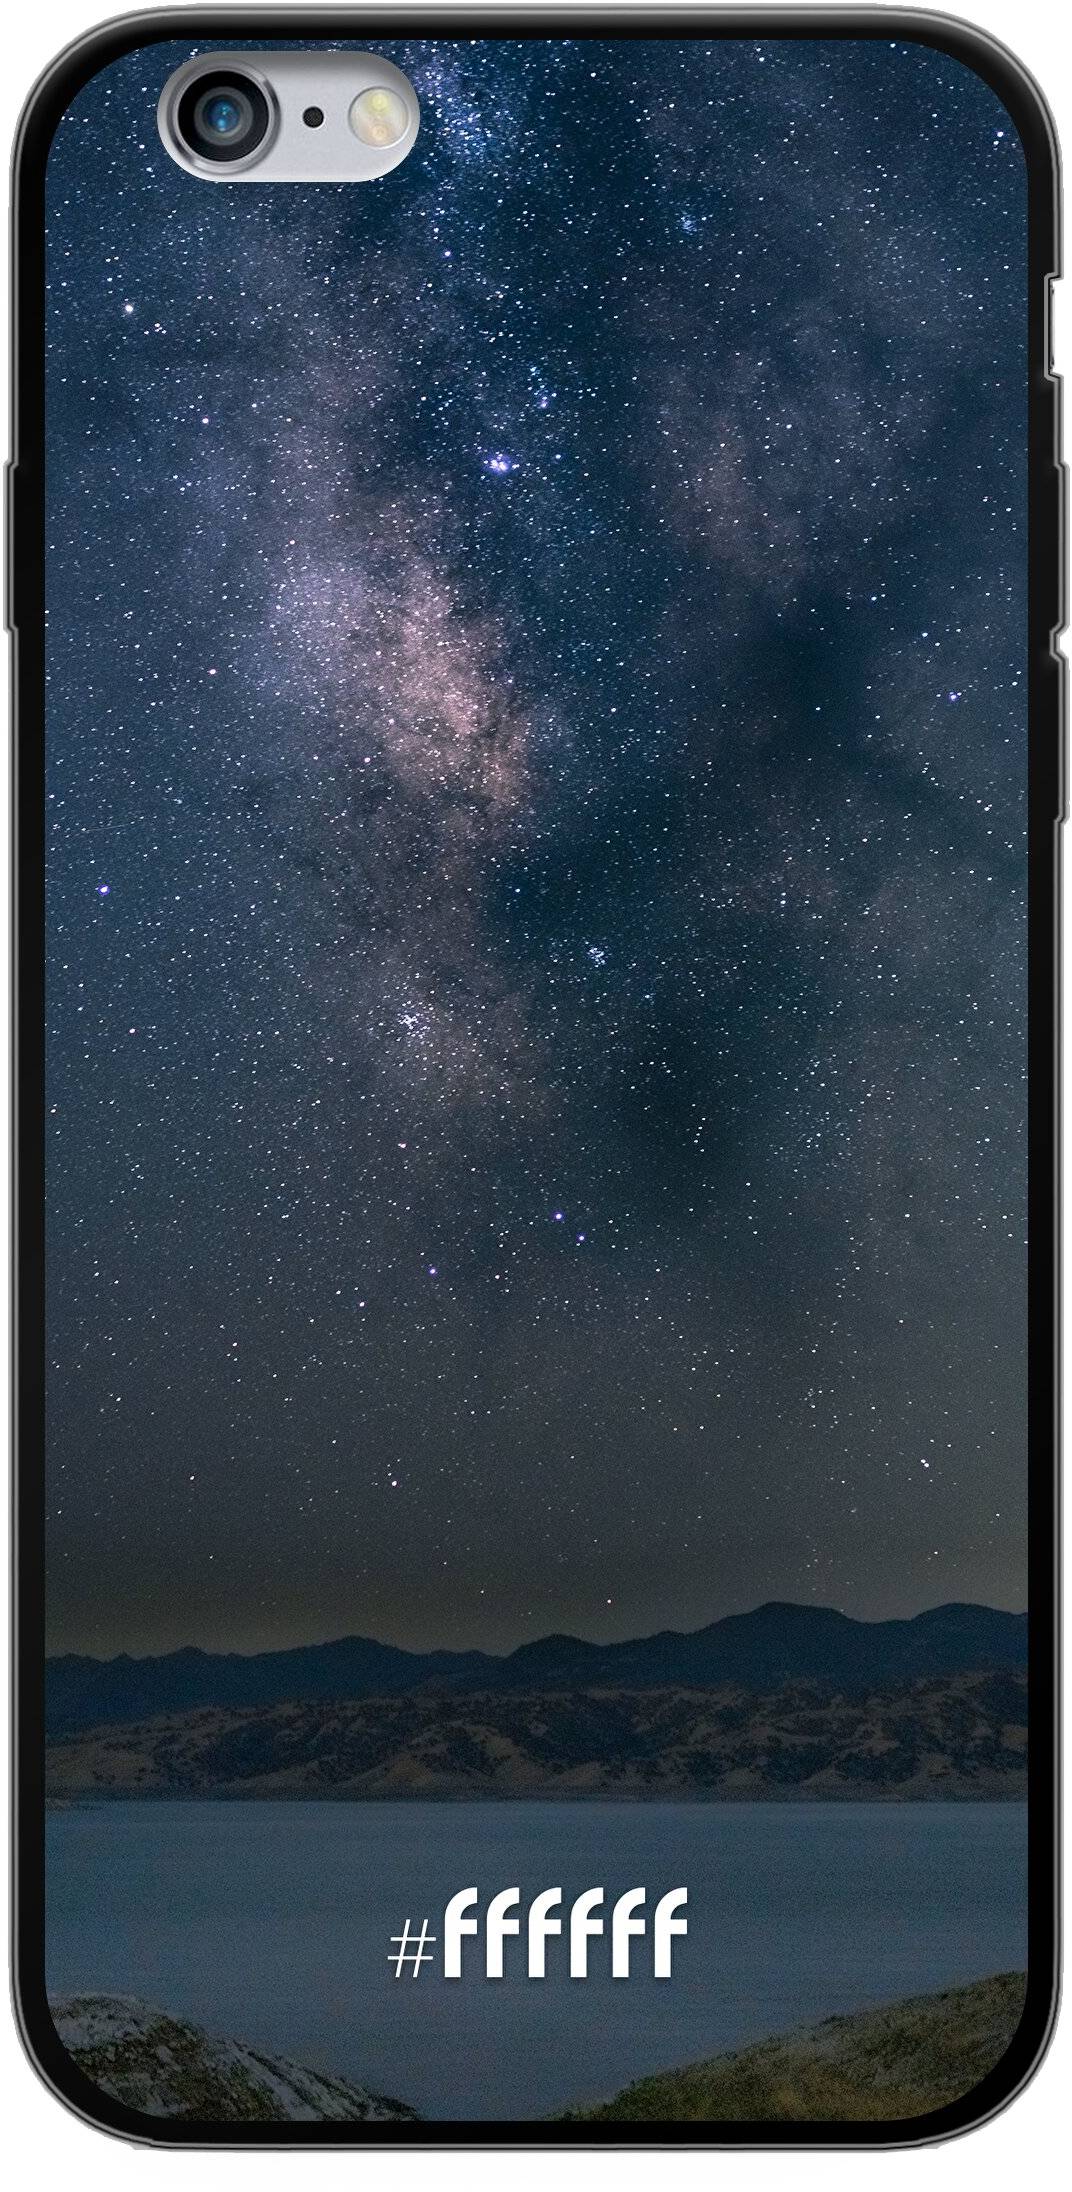 Landscape Milky Way iPhone 6